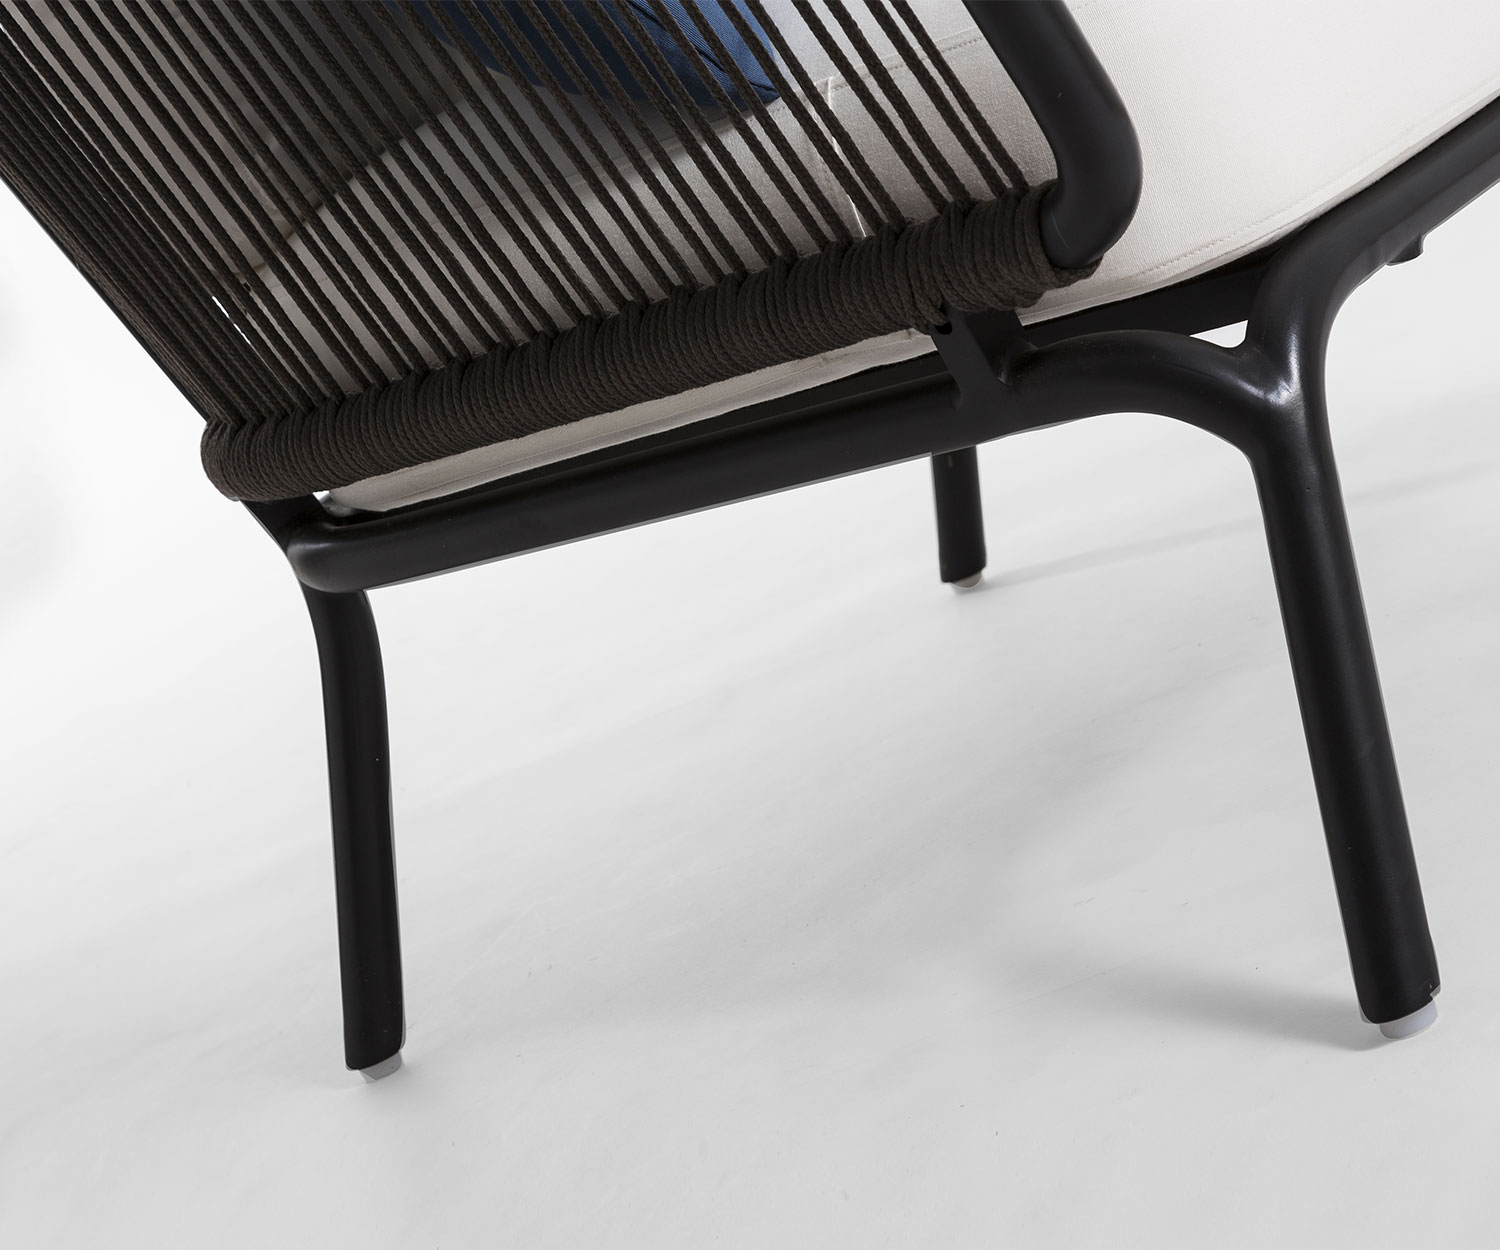 Exclusieve Oasiq Yland chaise longue 2-zits design bank met frame in antraciet donkergrijs